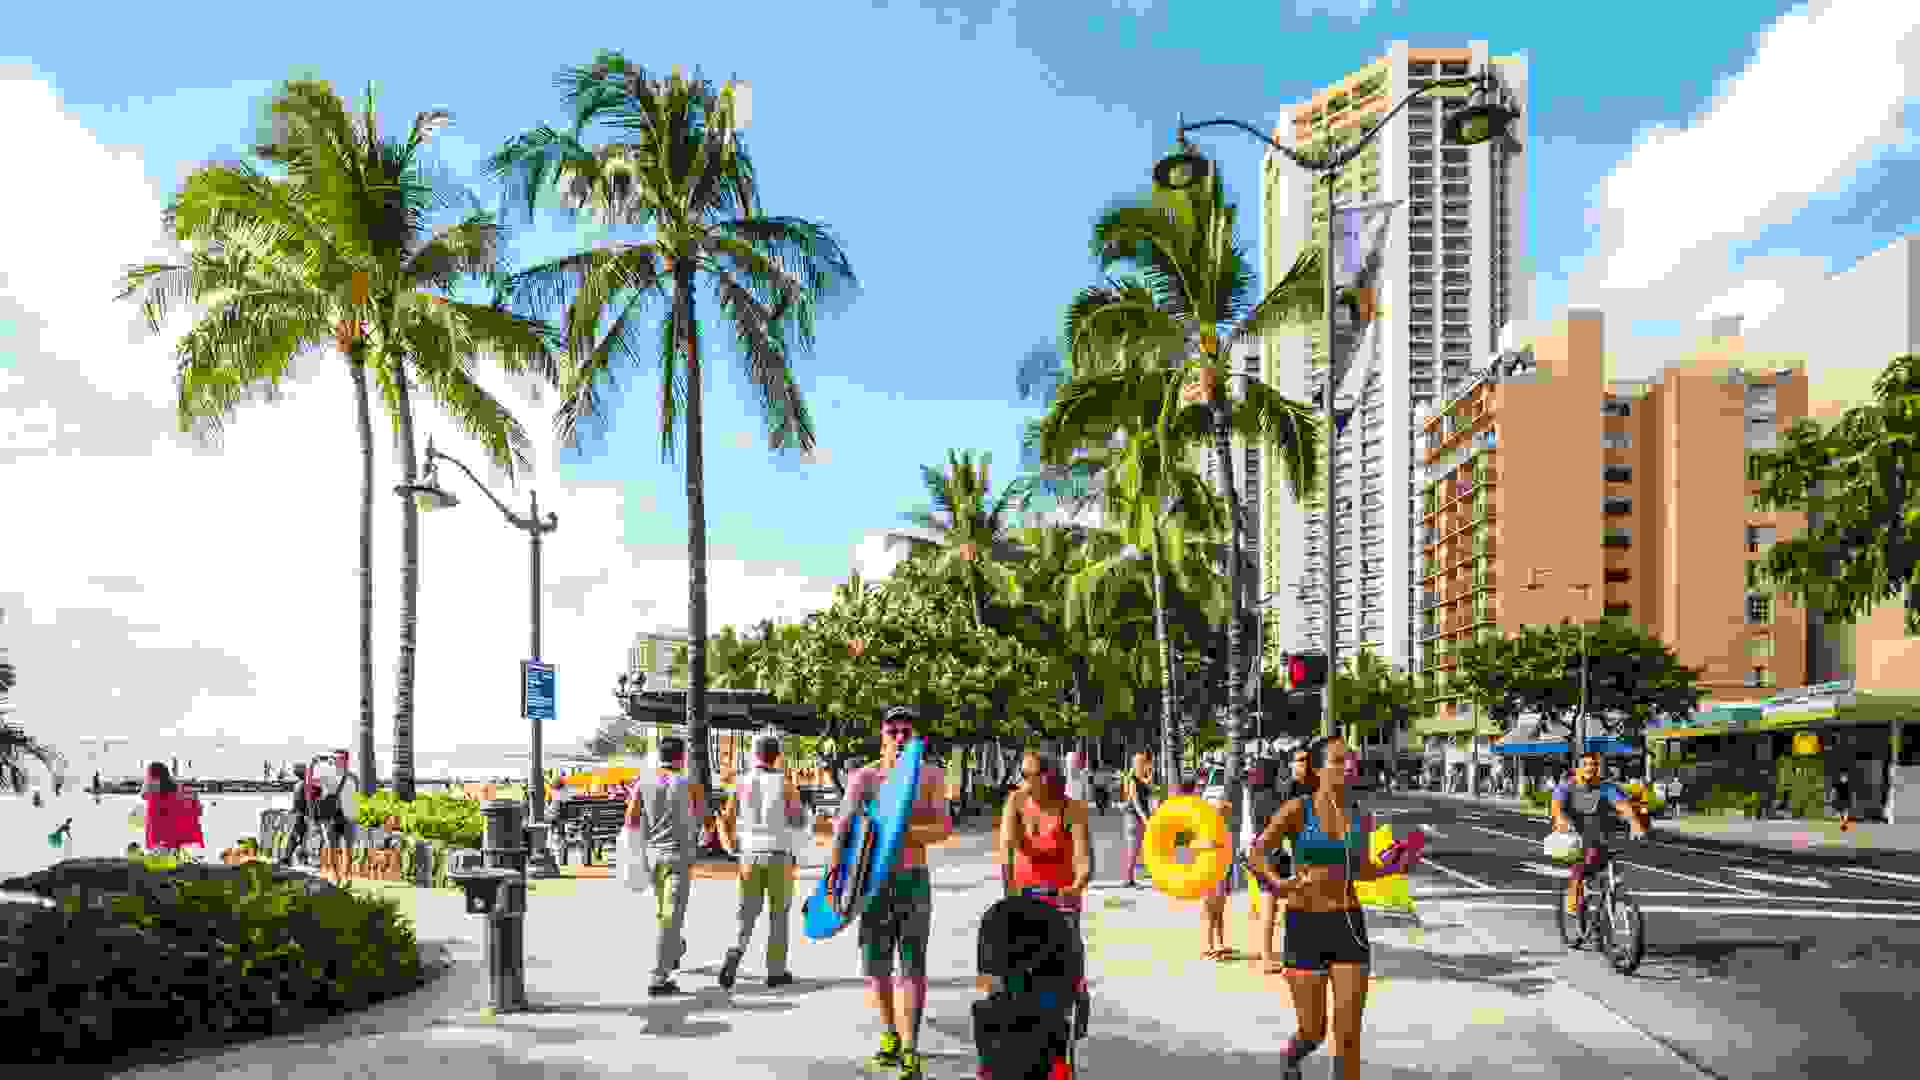 Waikiki, Hawaii, USA  - January 5, 2014: People jogging, cycling and walking along Waikiki Beach.